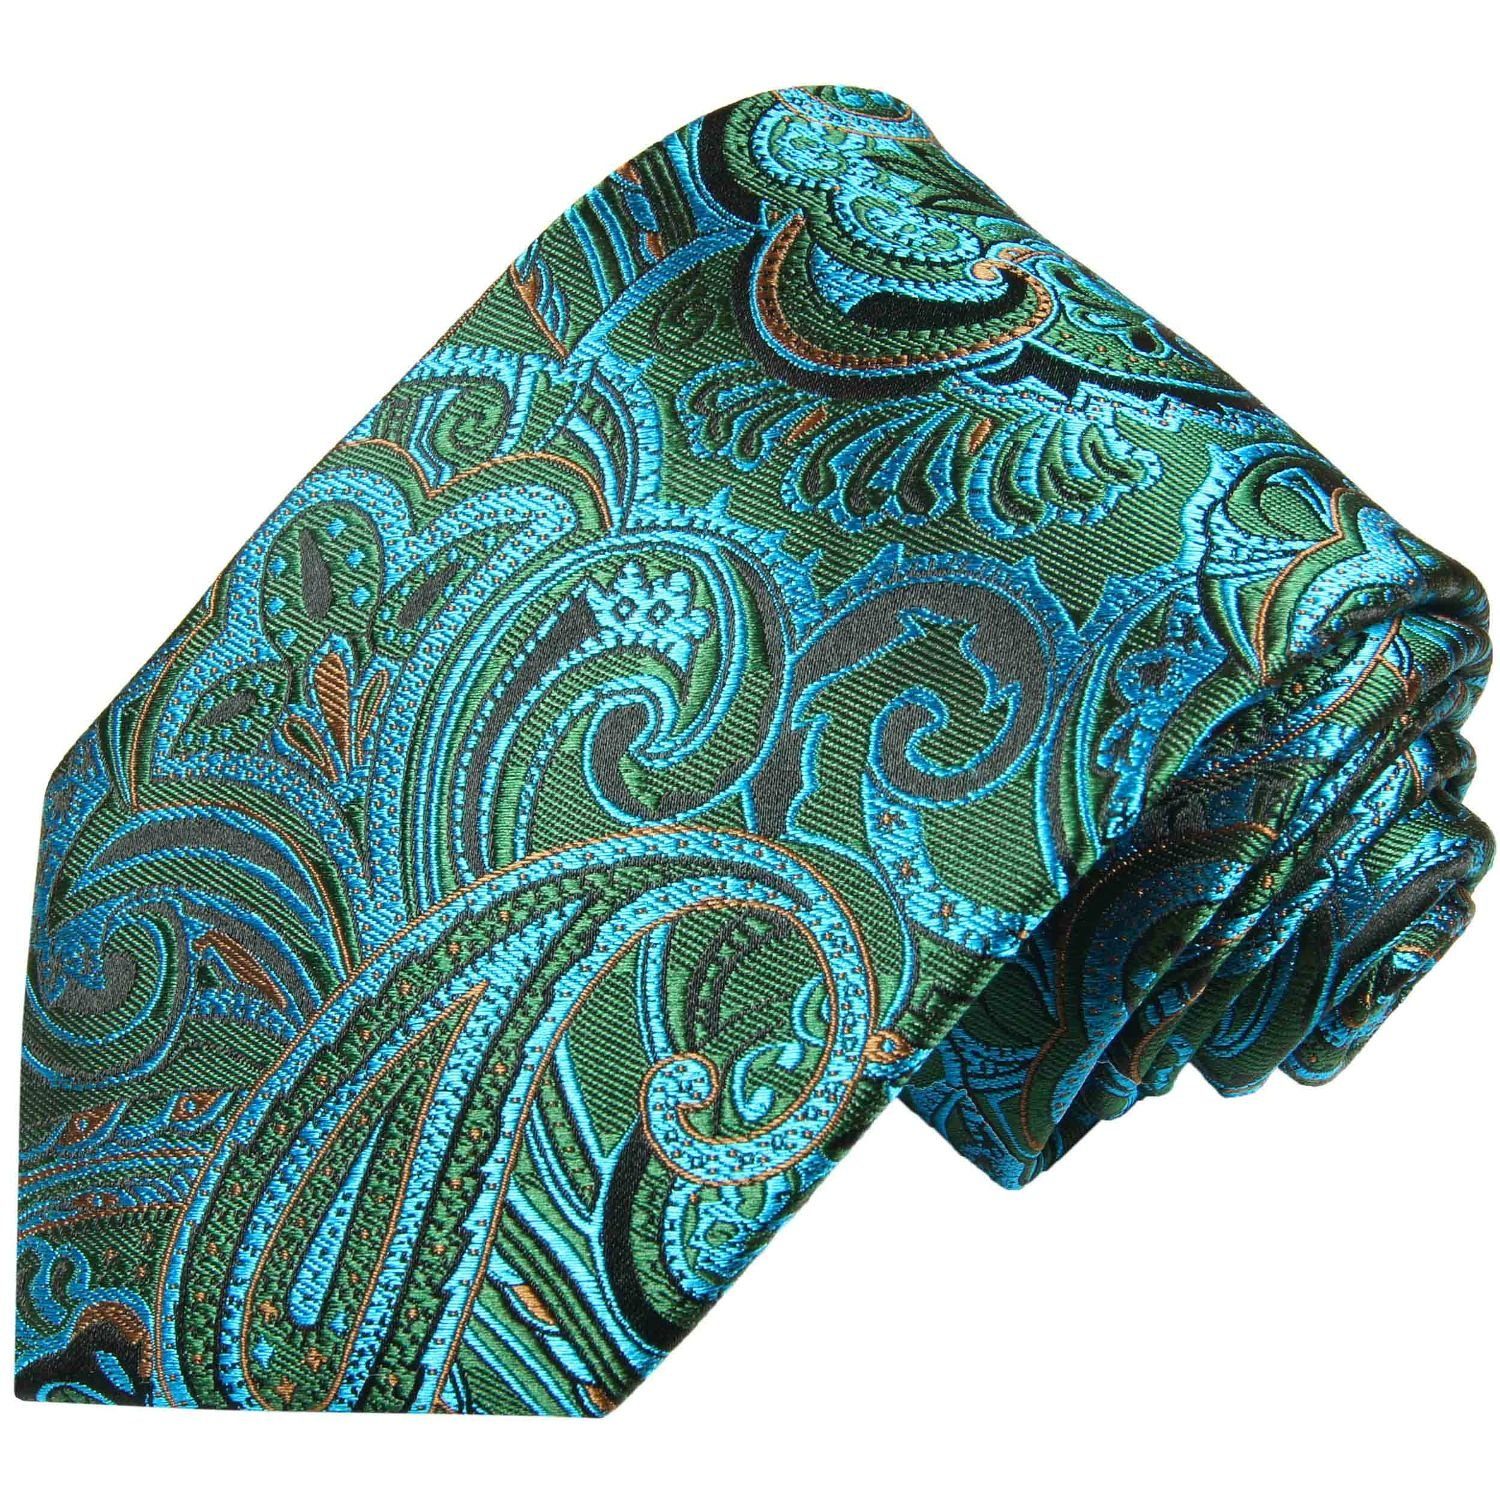 Paul Malone Krawatte Elegante Herren Breit brokat türkis Seidenkrawatte 2008 grün Schlips Seide (8cm), blau 100% paisley